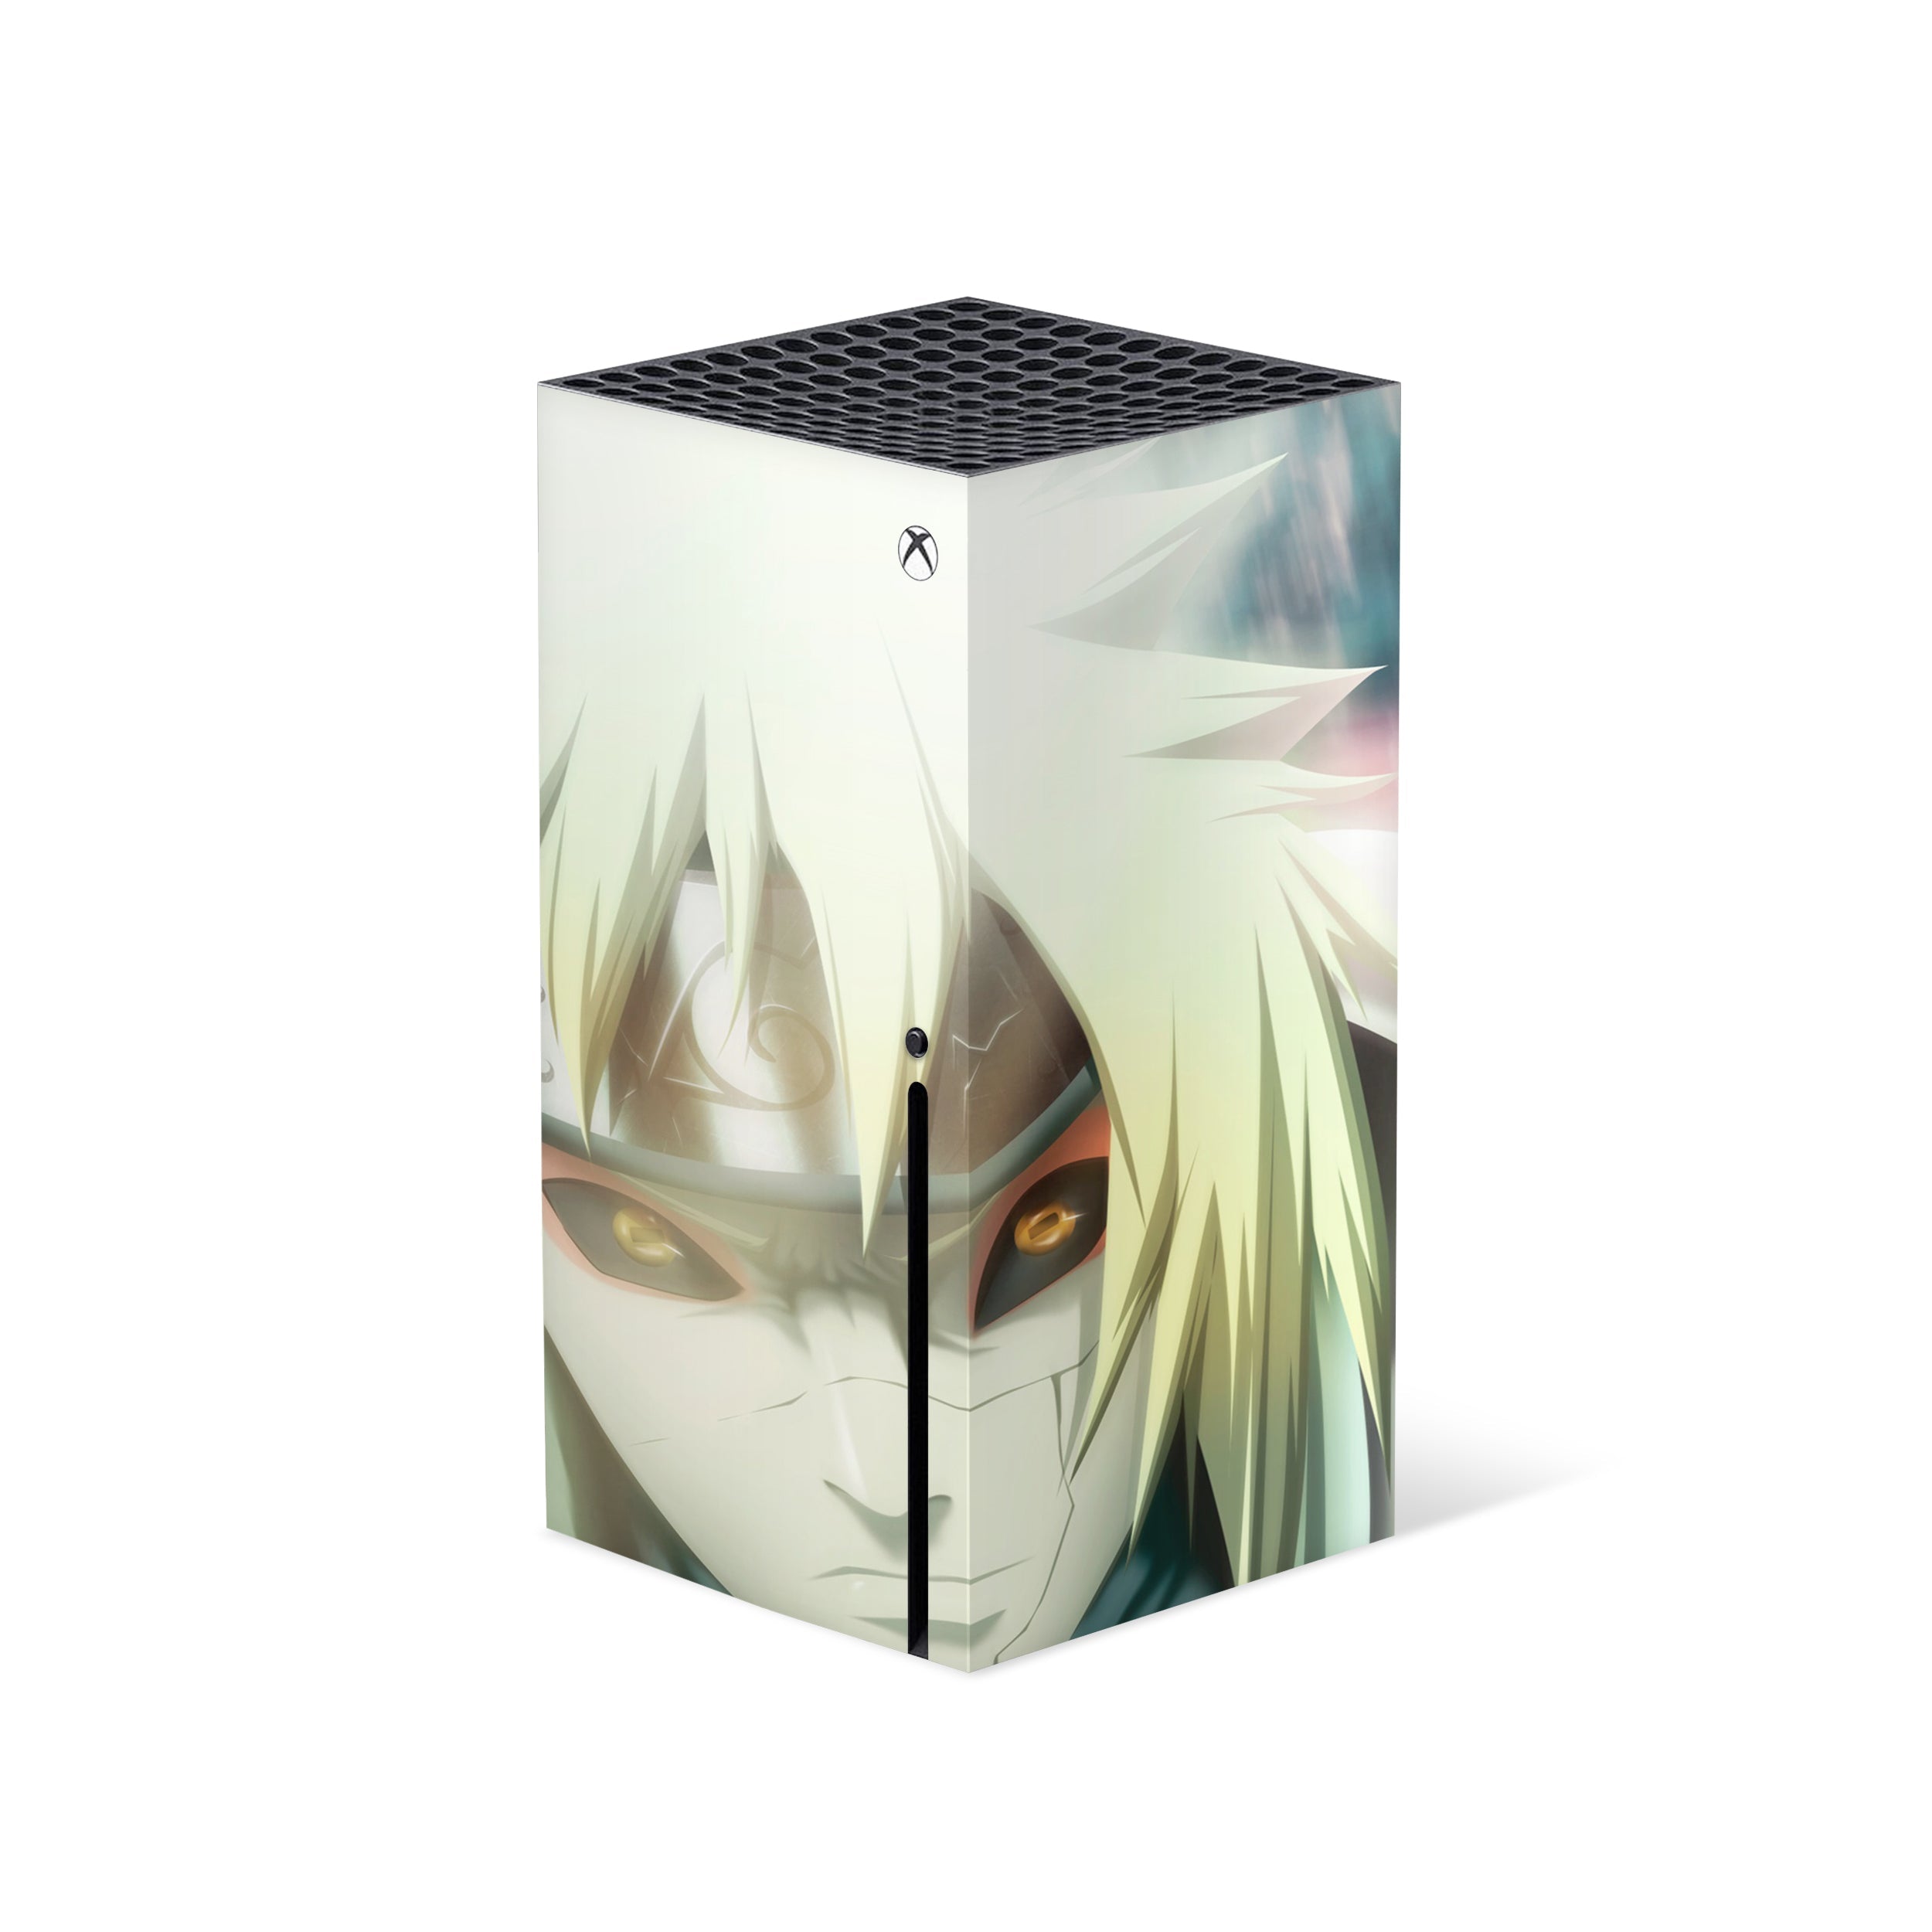 A video game skin featuring a Naruto Minato design for the Xbox Series X.